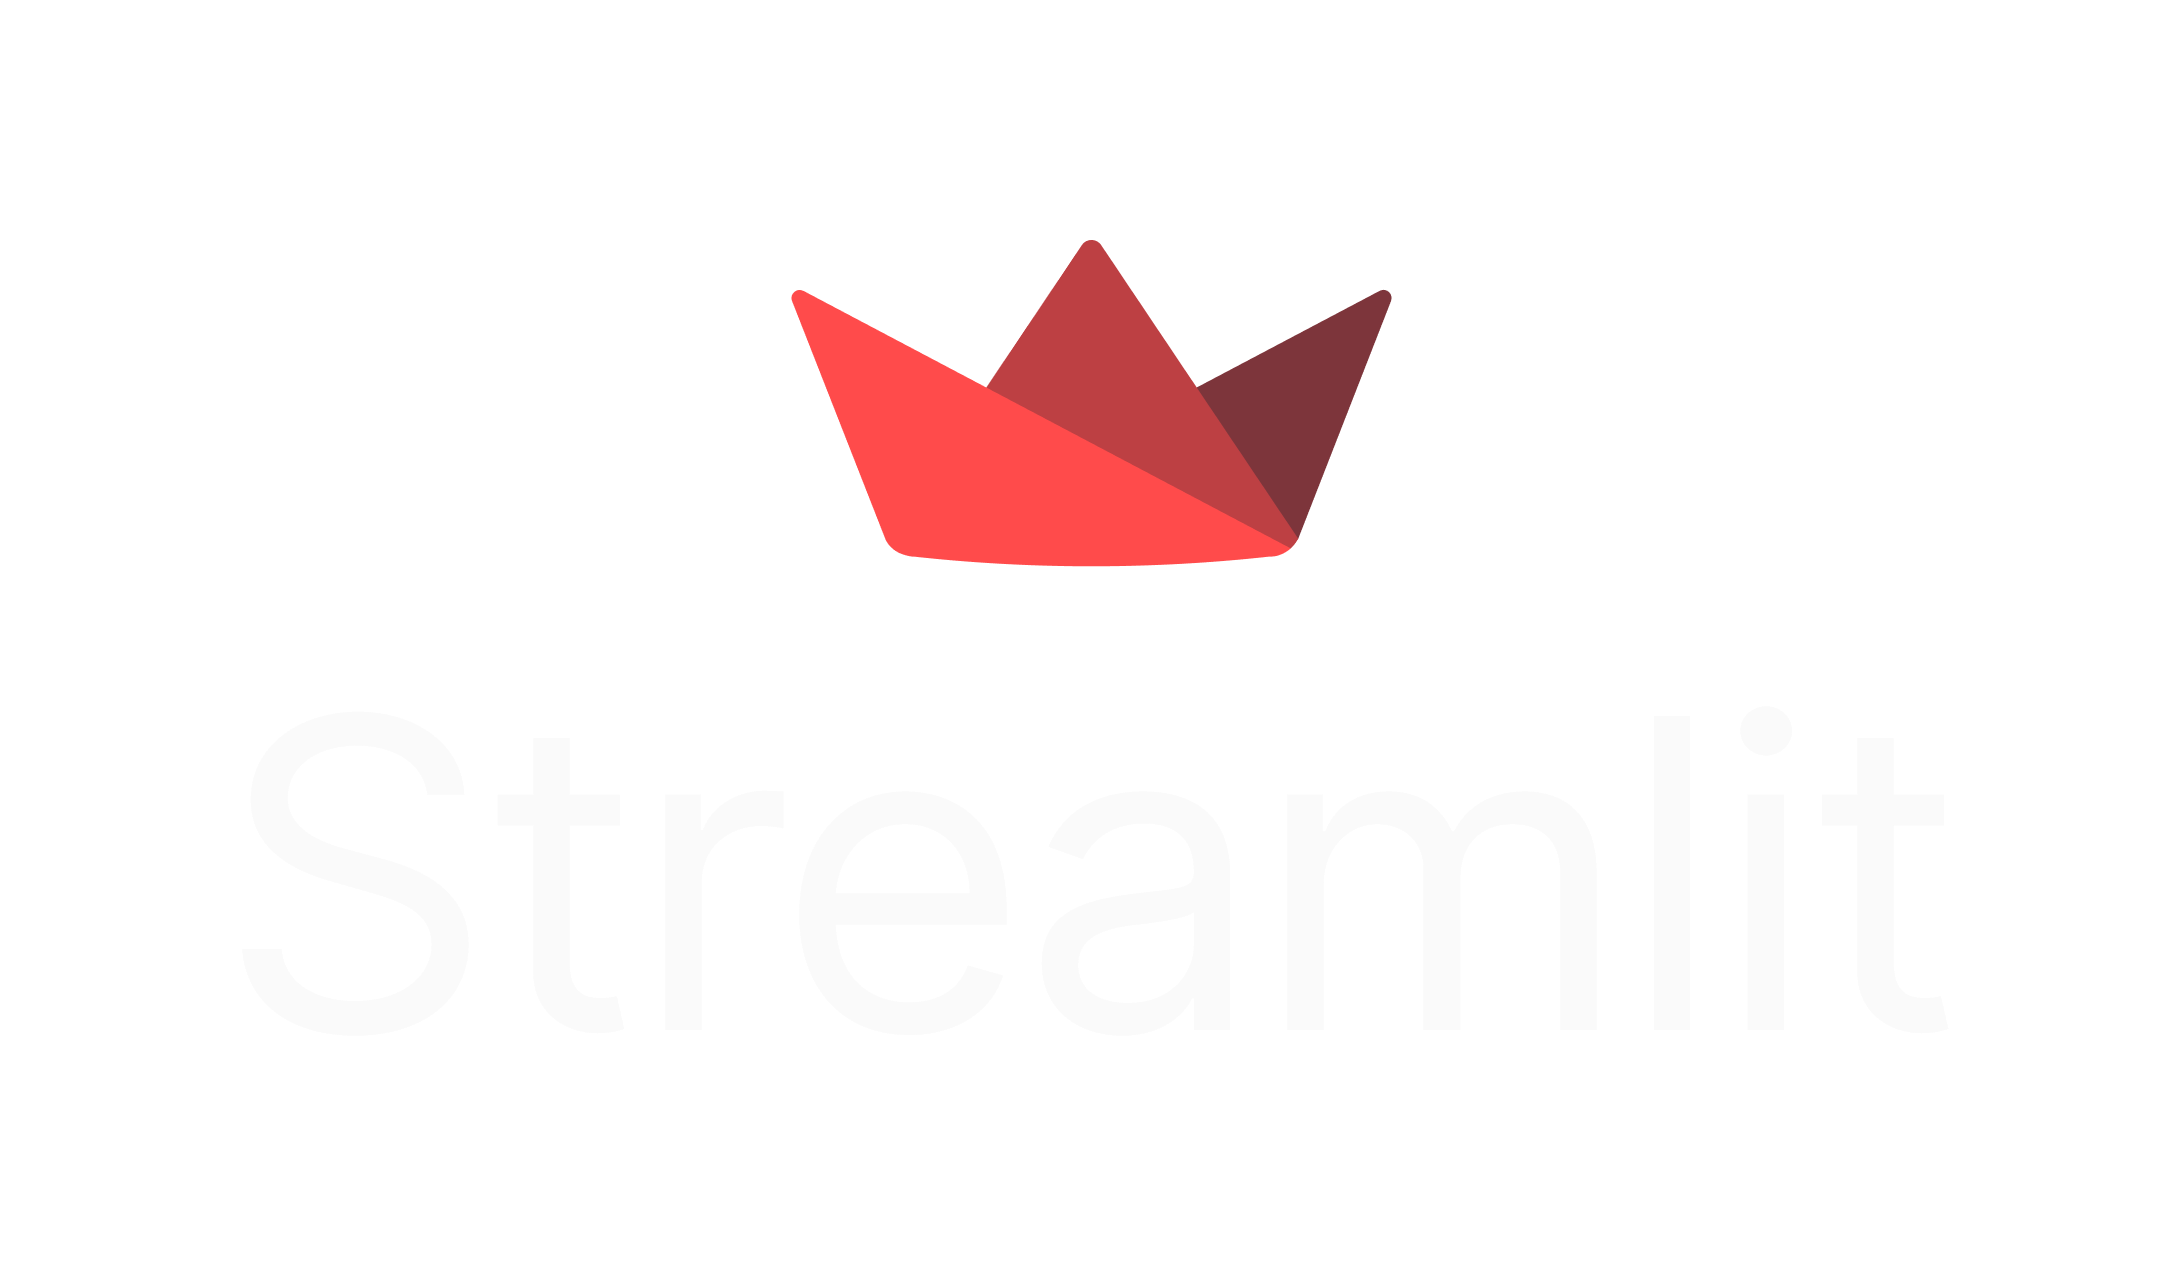 Streamlit logo on dark background